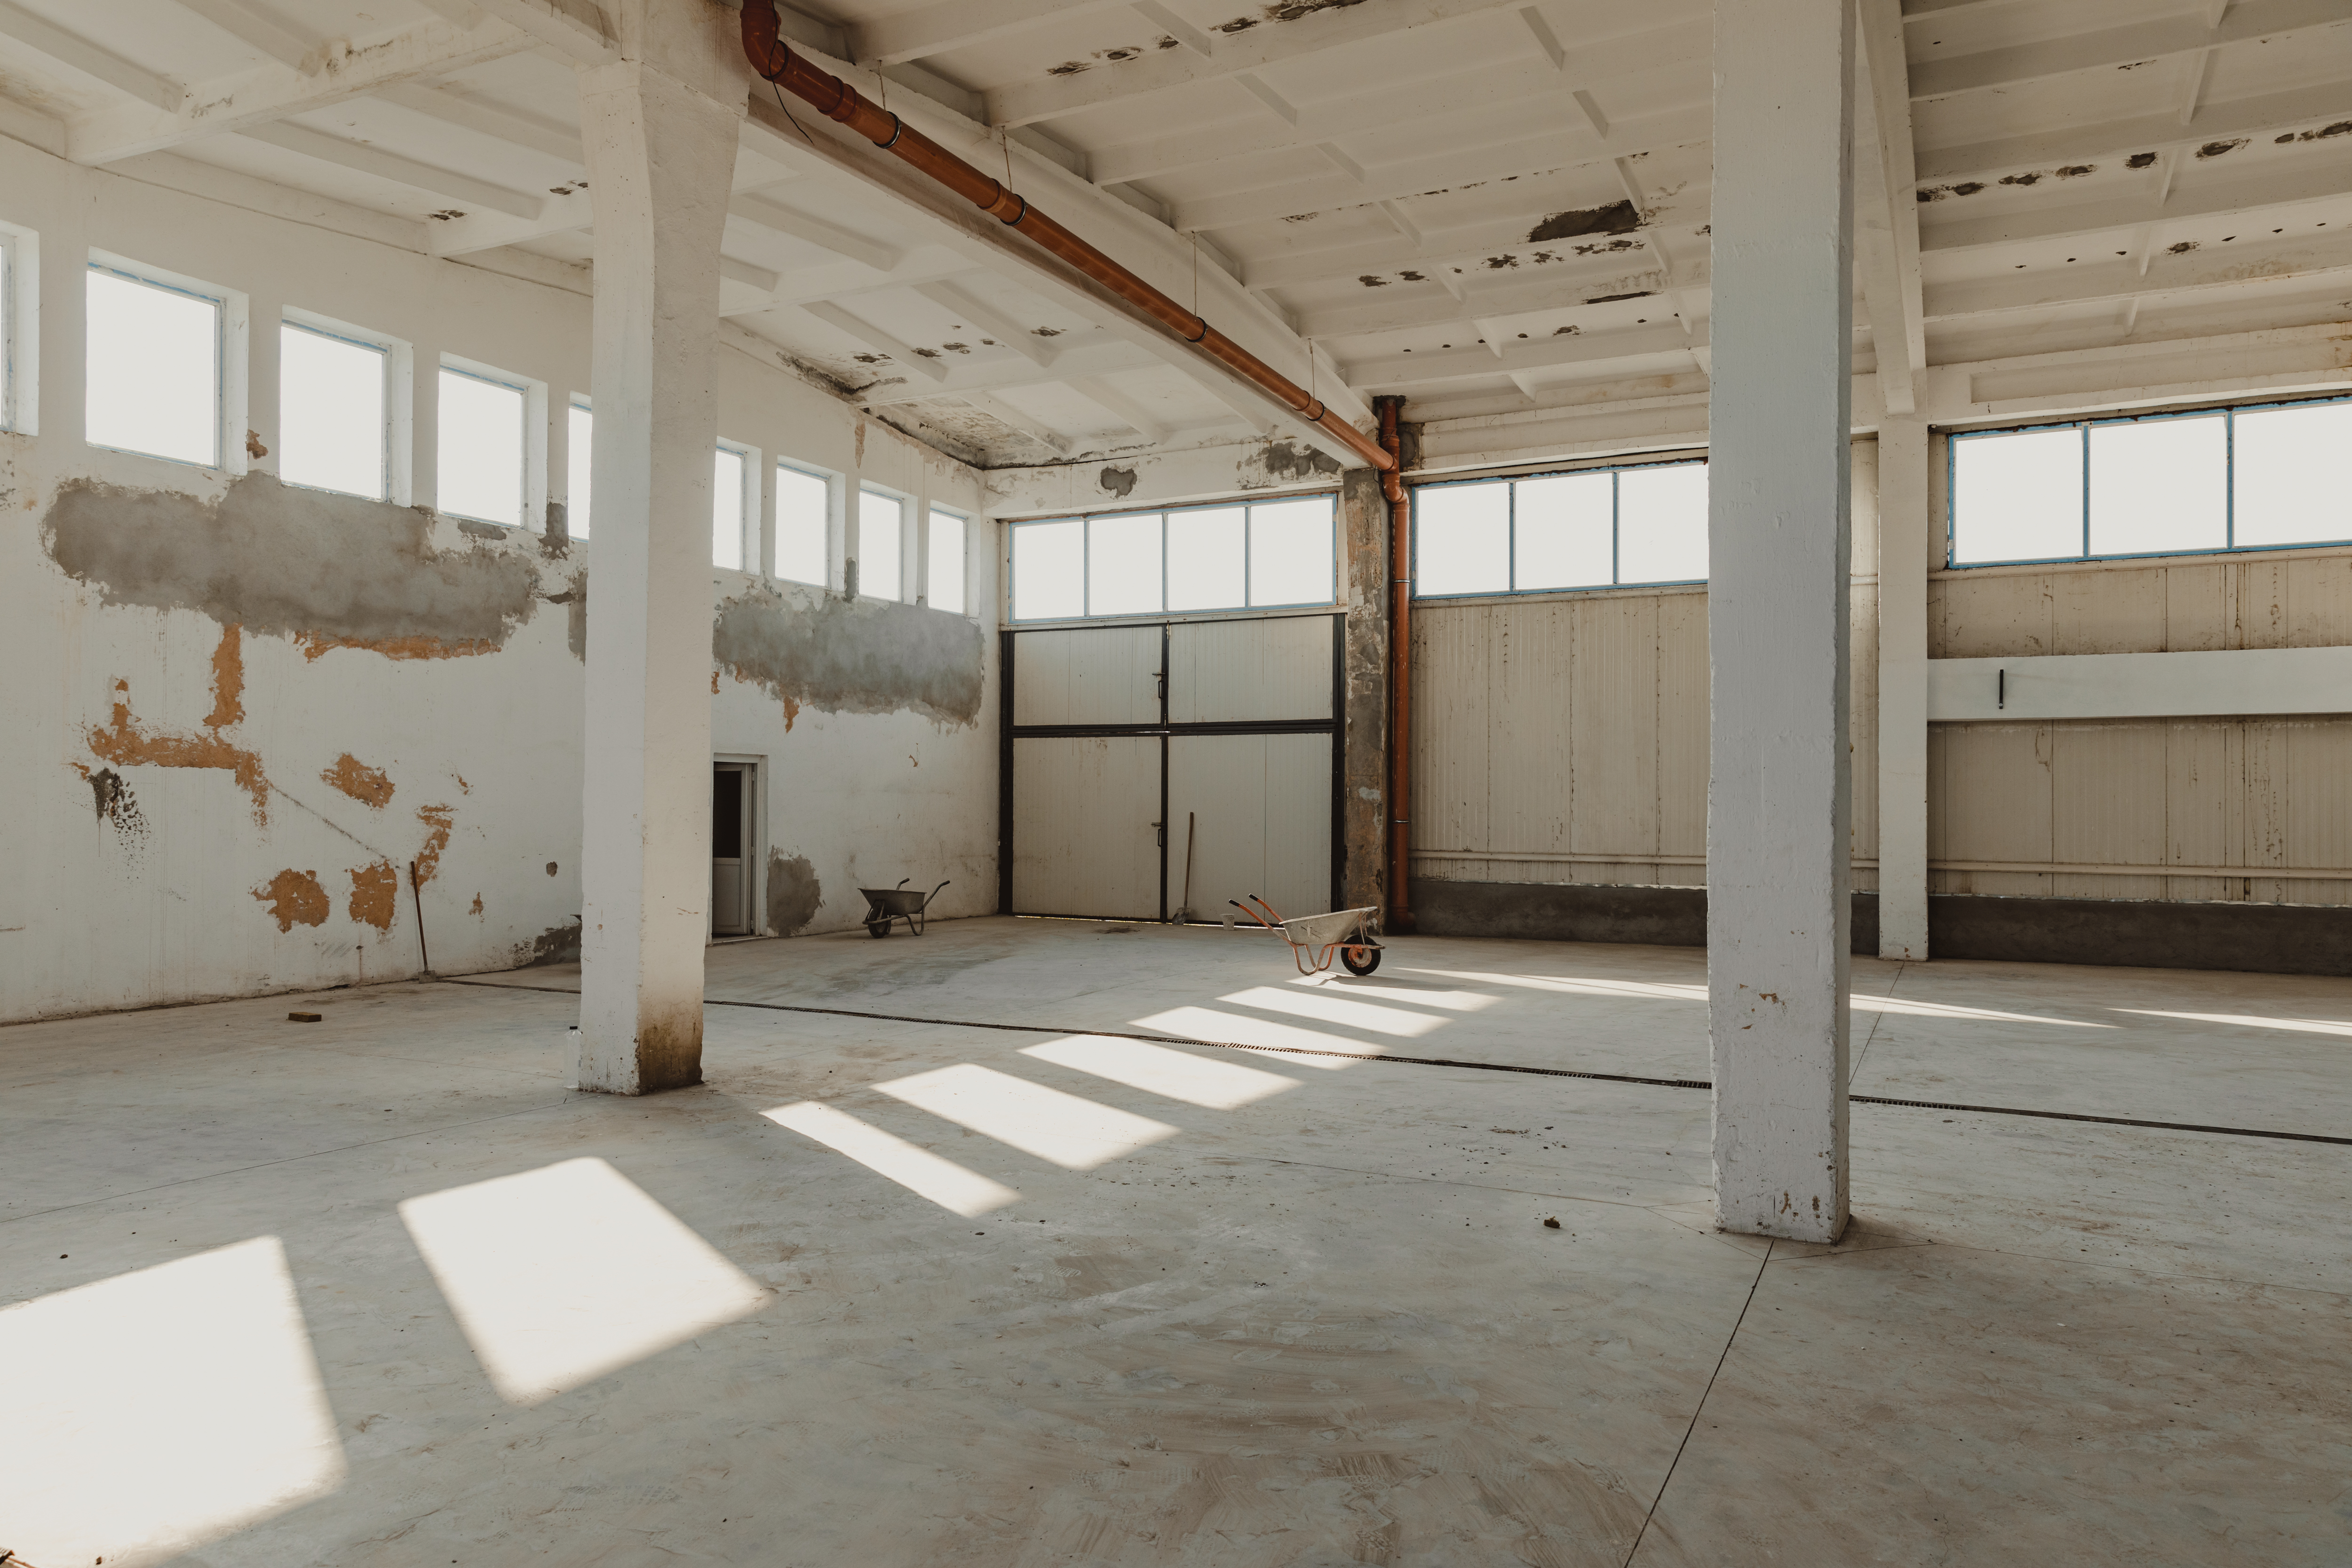 inside-an-old-industrial-hall-2022-11-29-02-20-14-utc